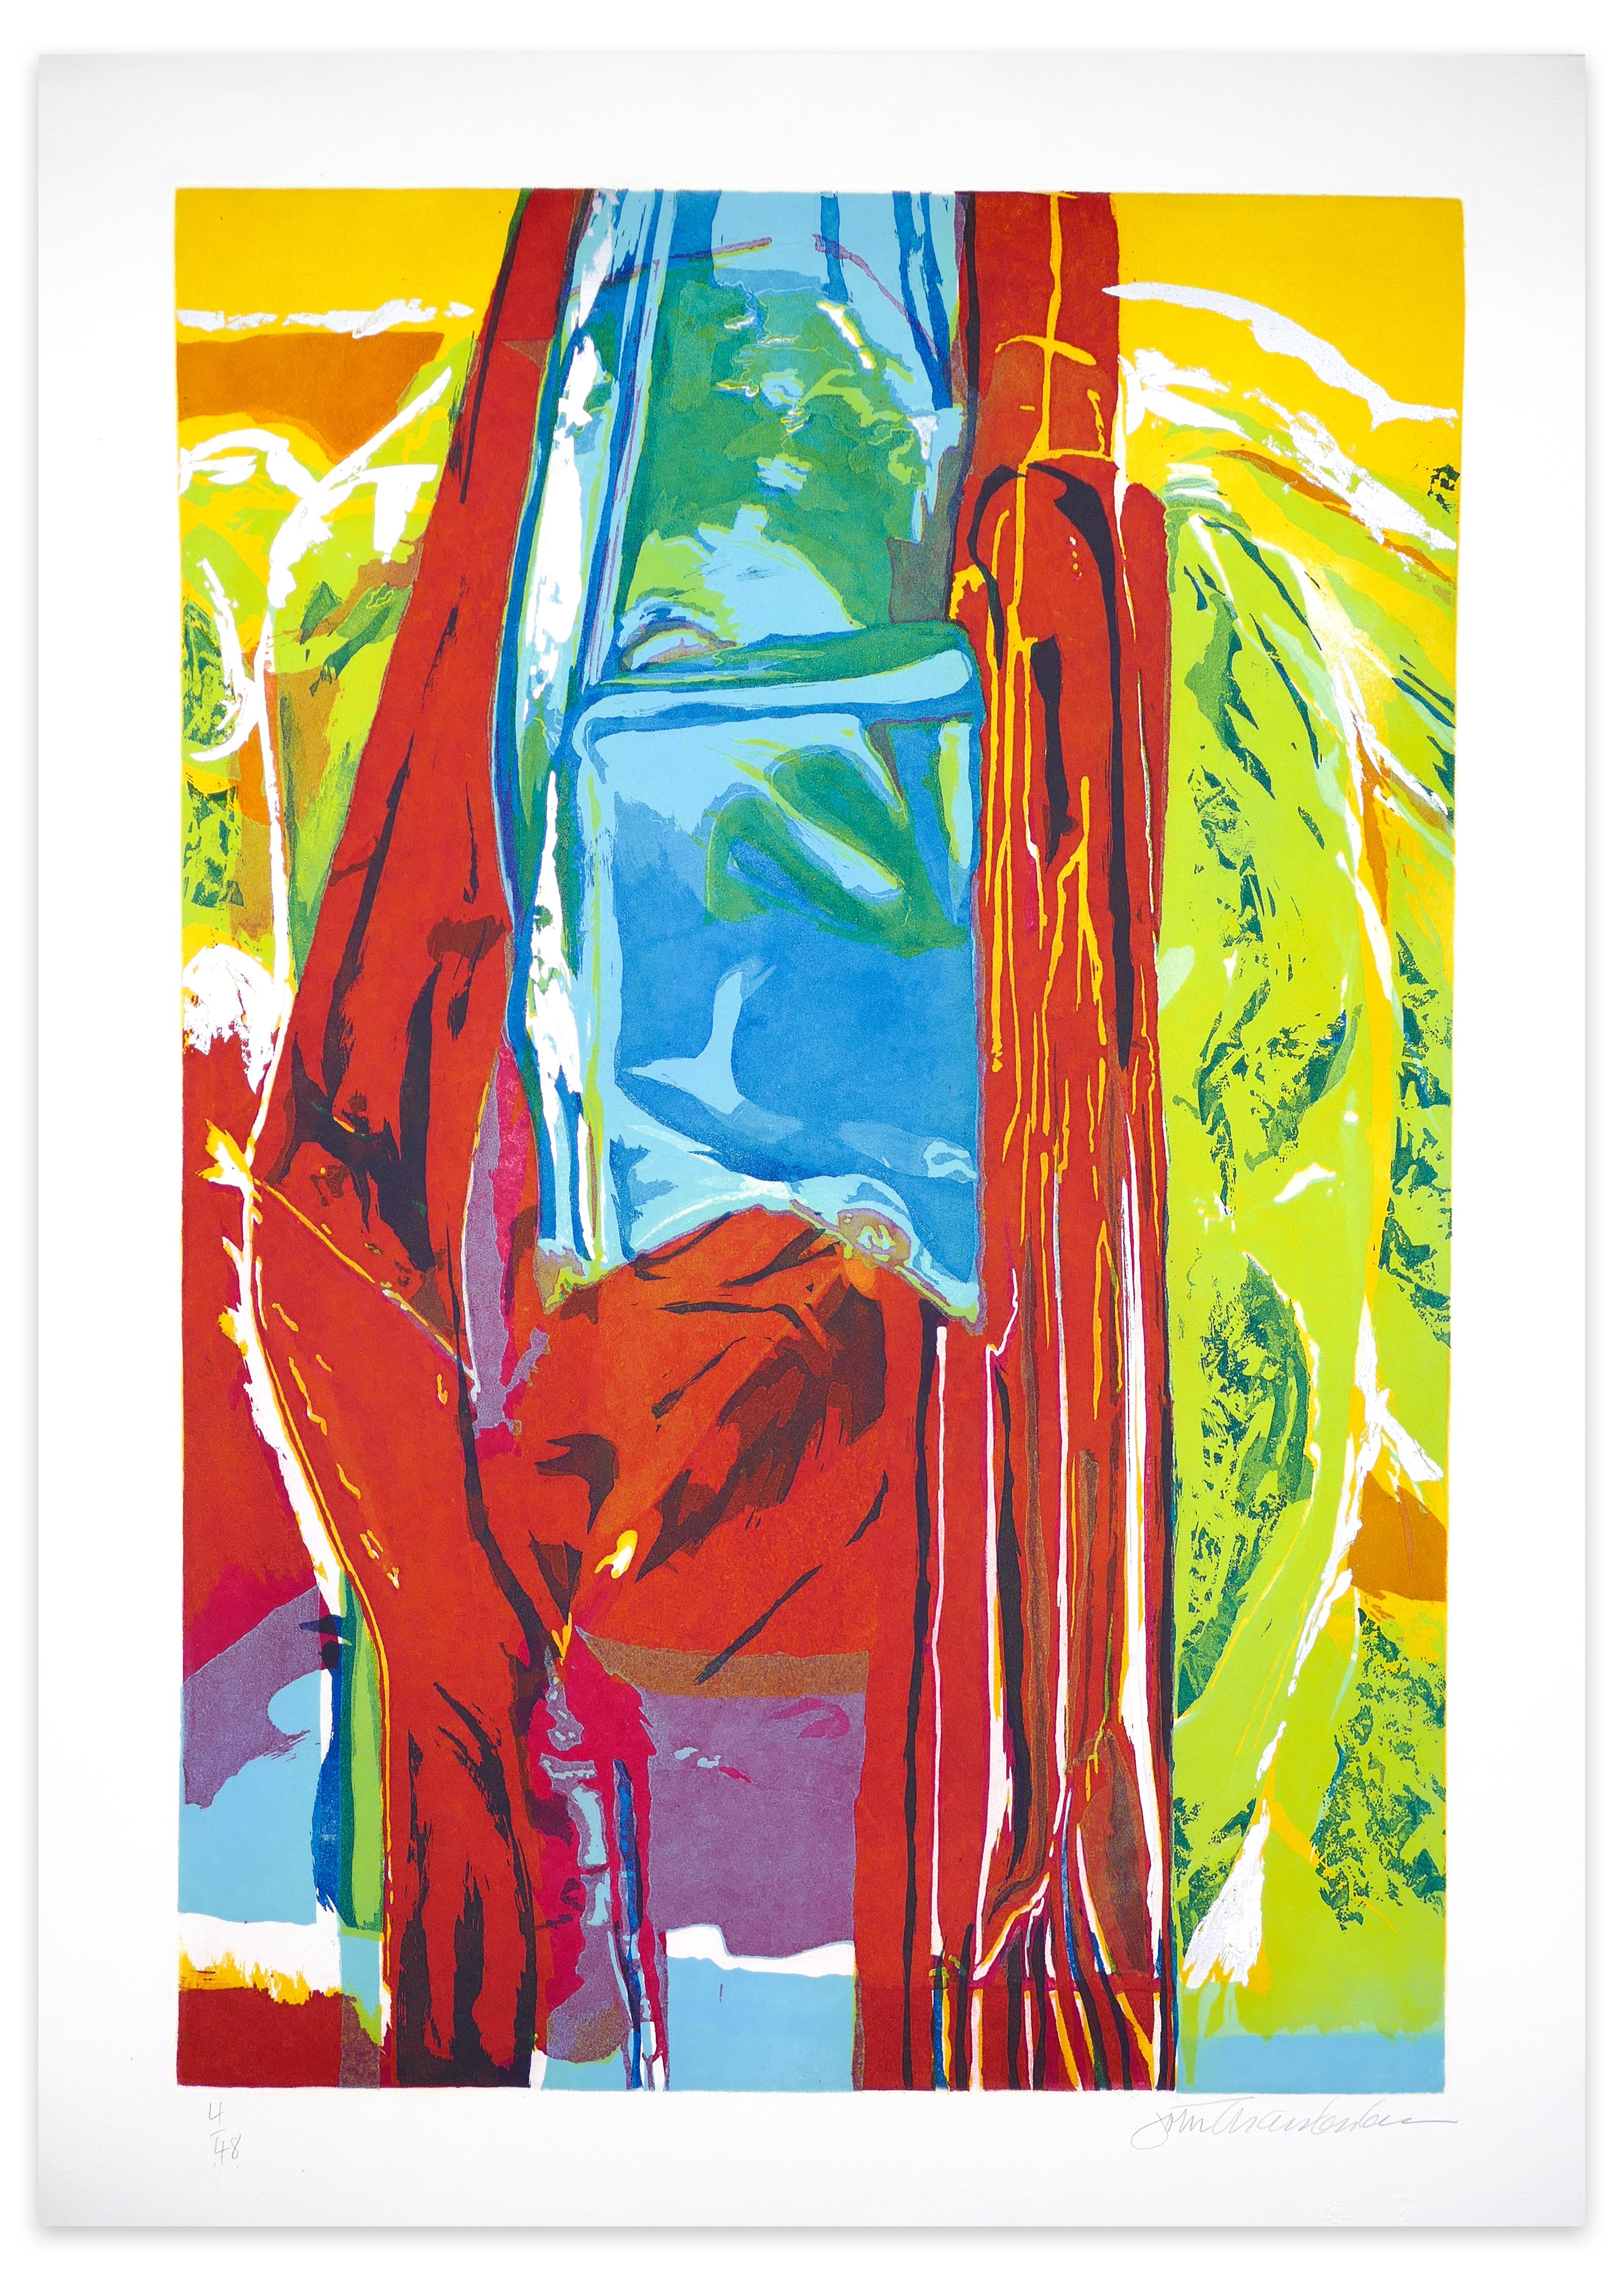 John Chamberlain Abstract Print - 3 Daughters, More Rain - Original Etching - 1987